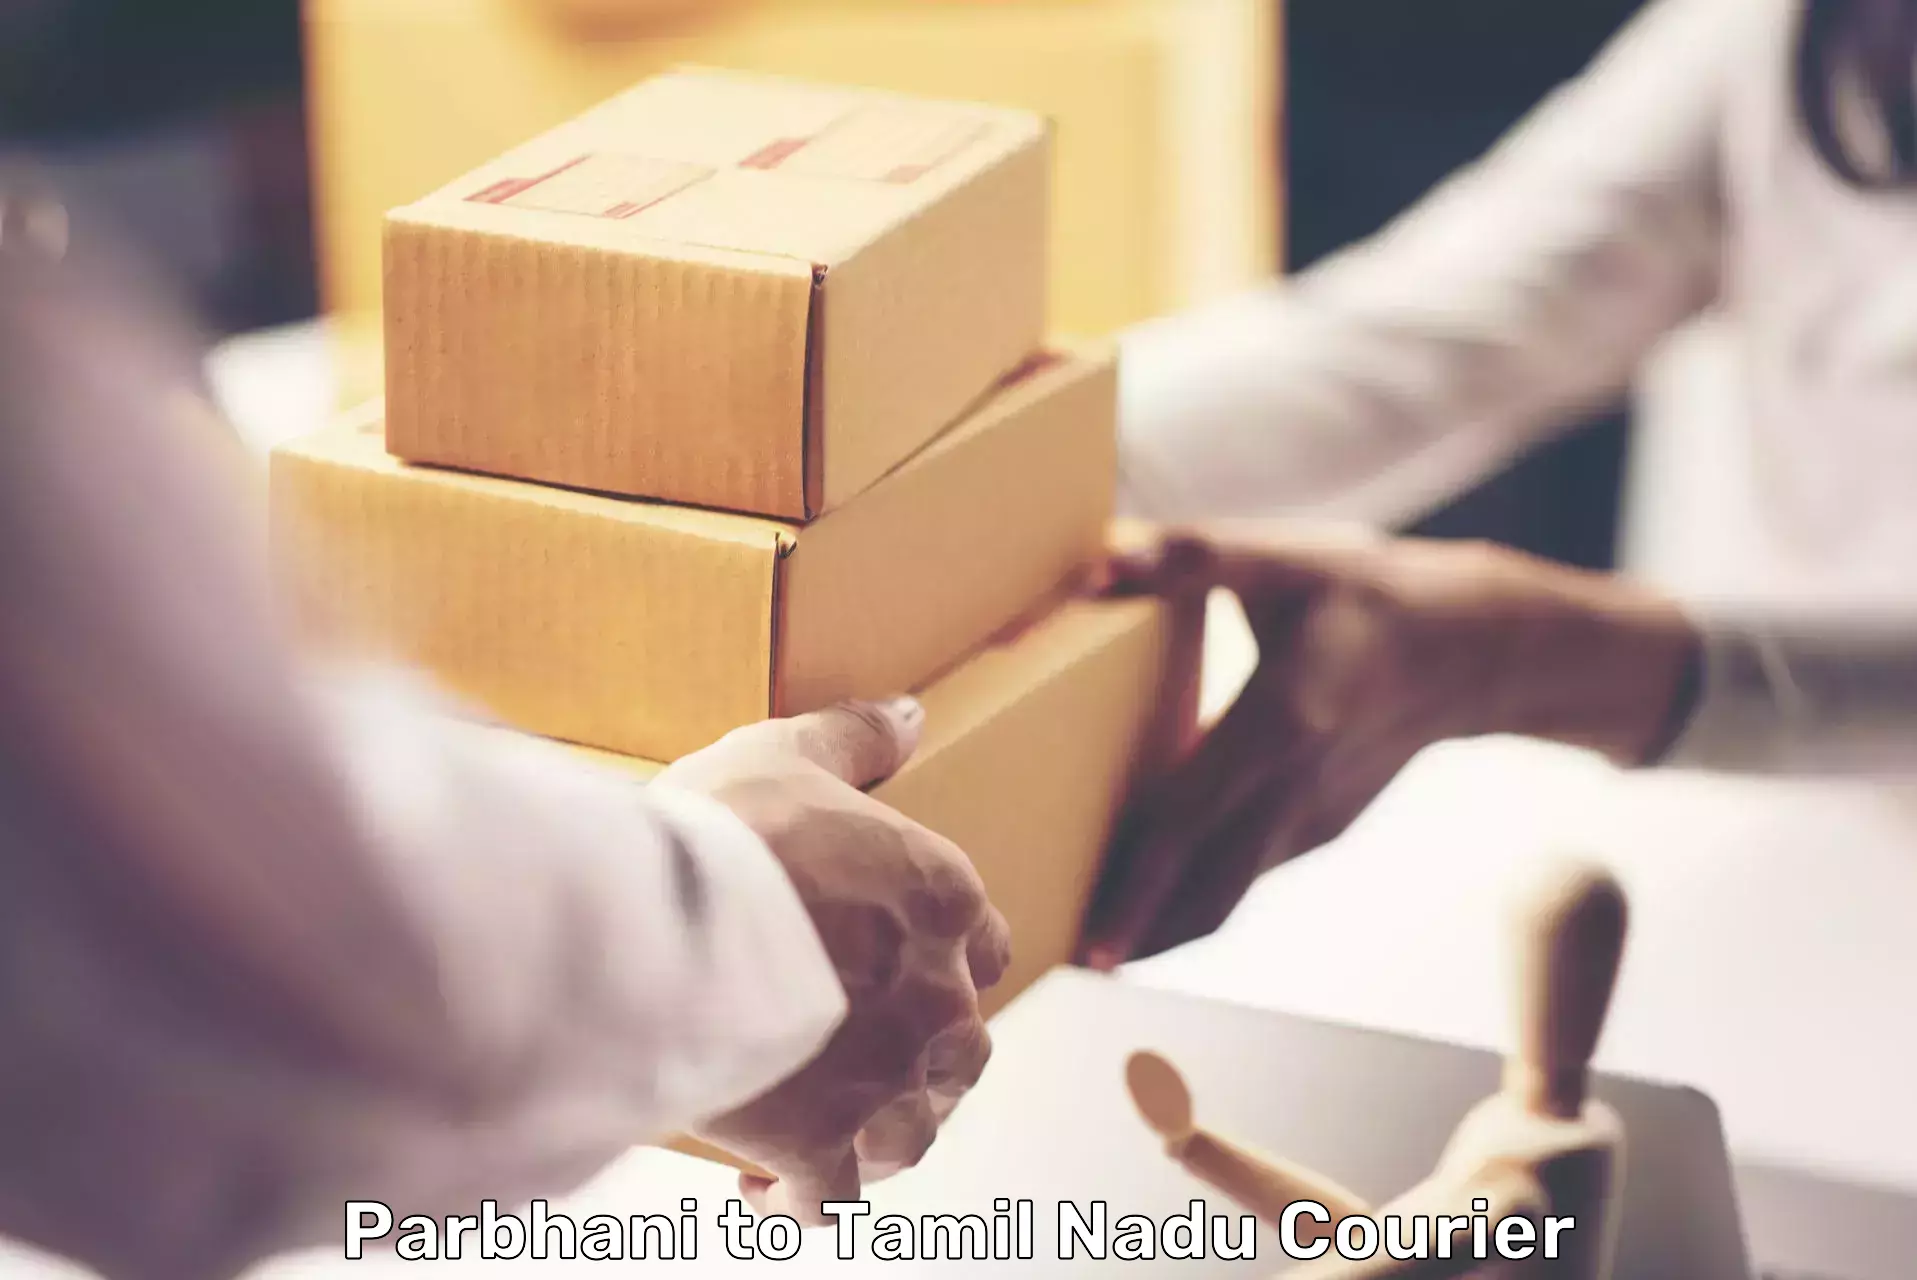 Logistics service provider Parbhani to Tamil Nadu